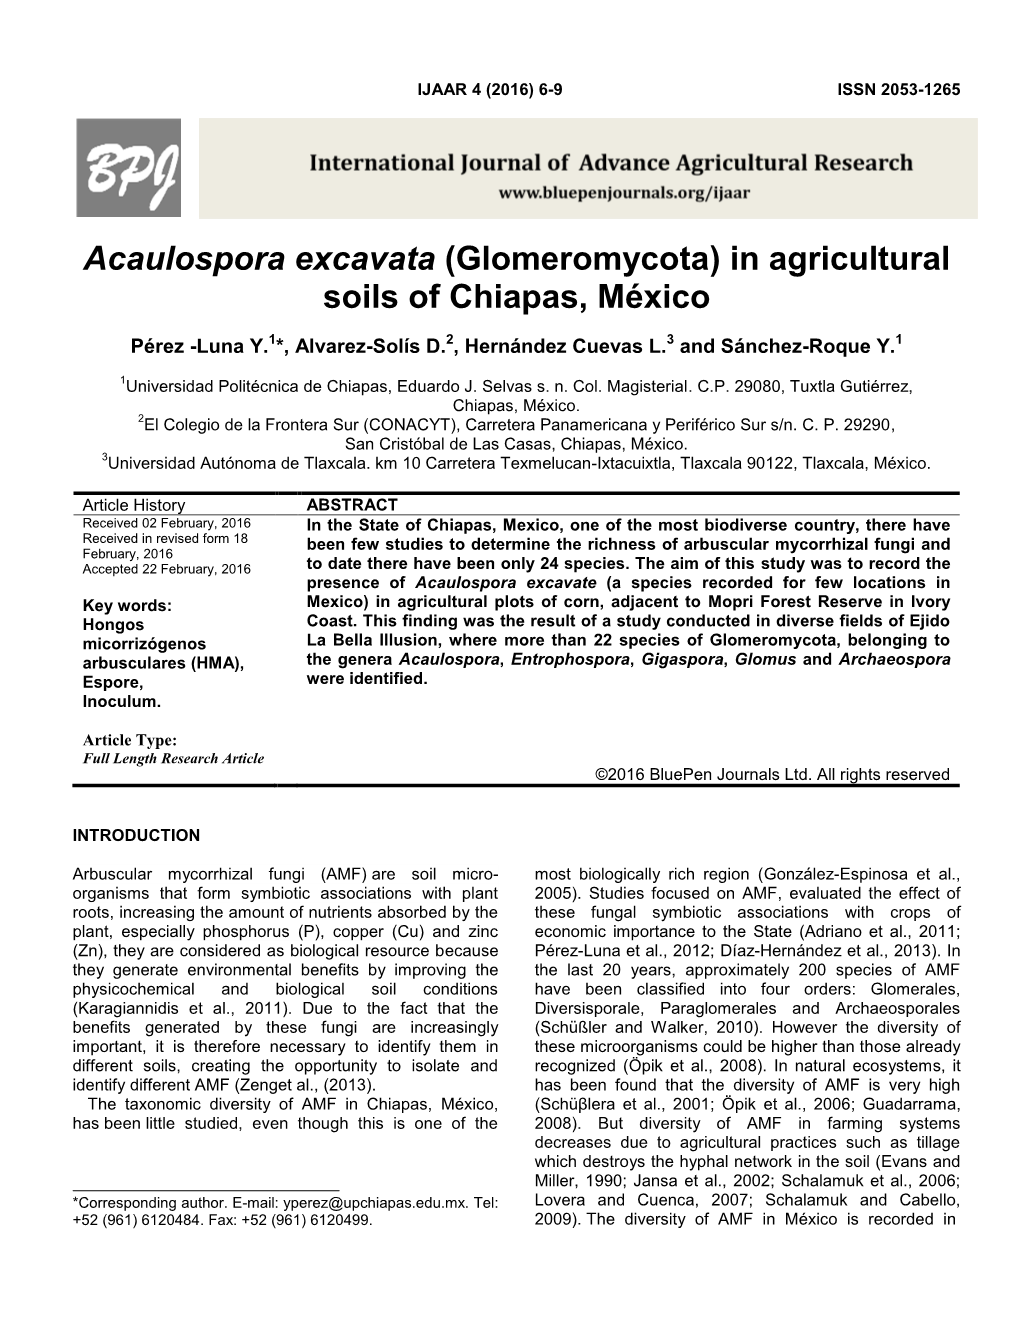 Acaulospora Excavata (Glomeromycota) in Agricultural Soils of Chiapas, México